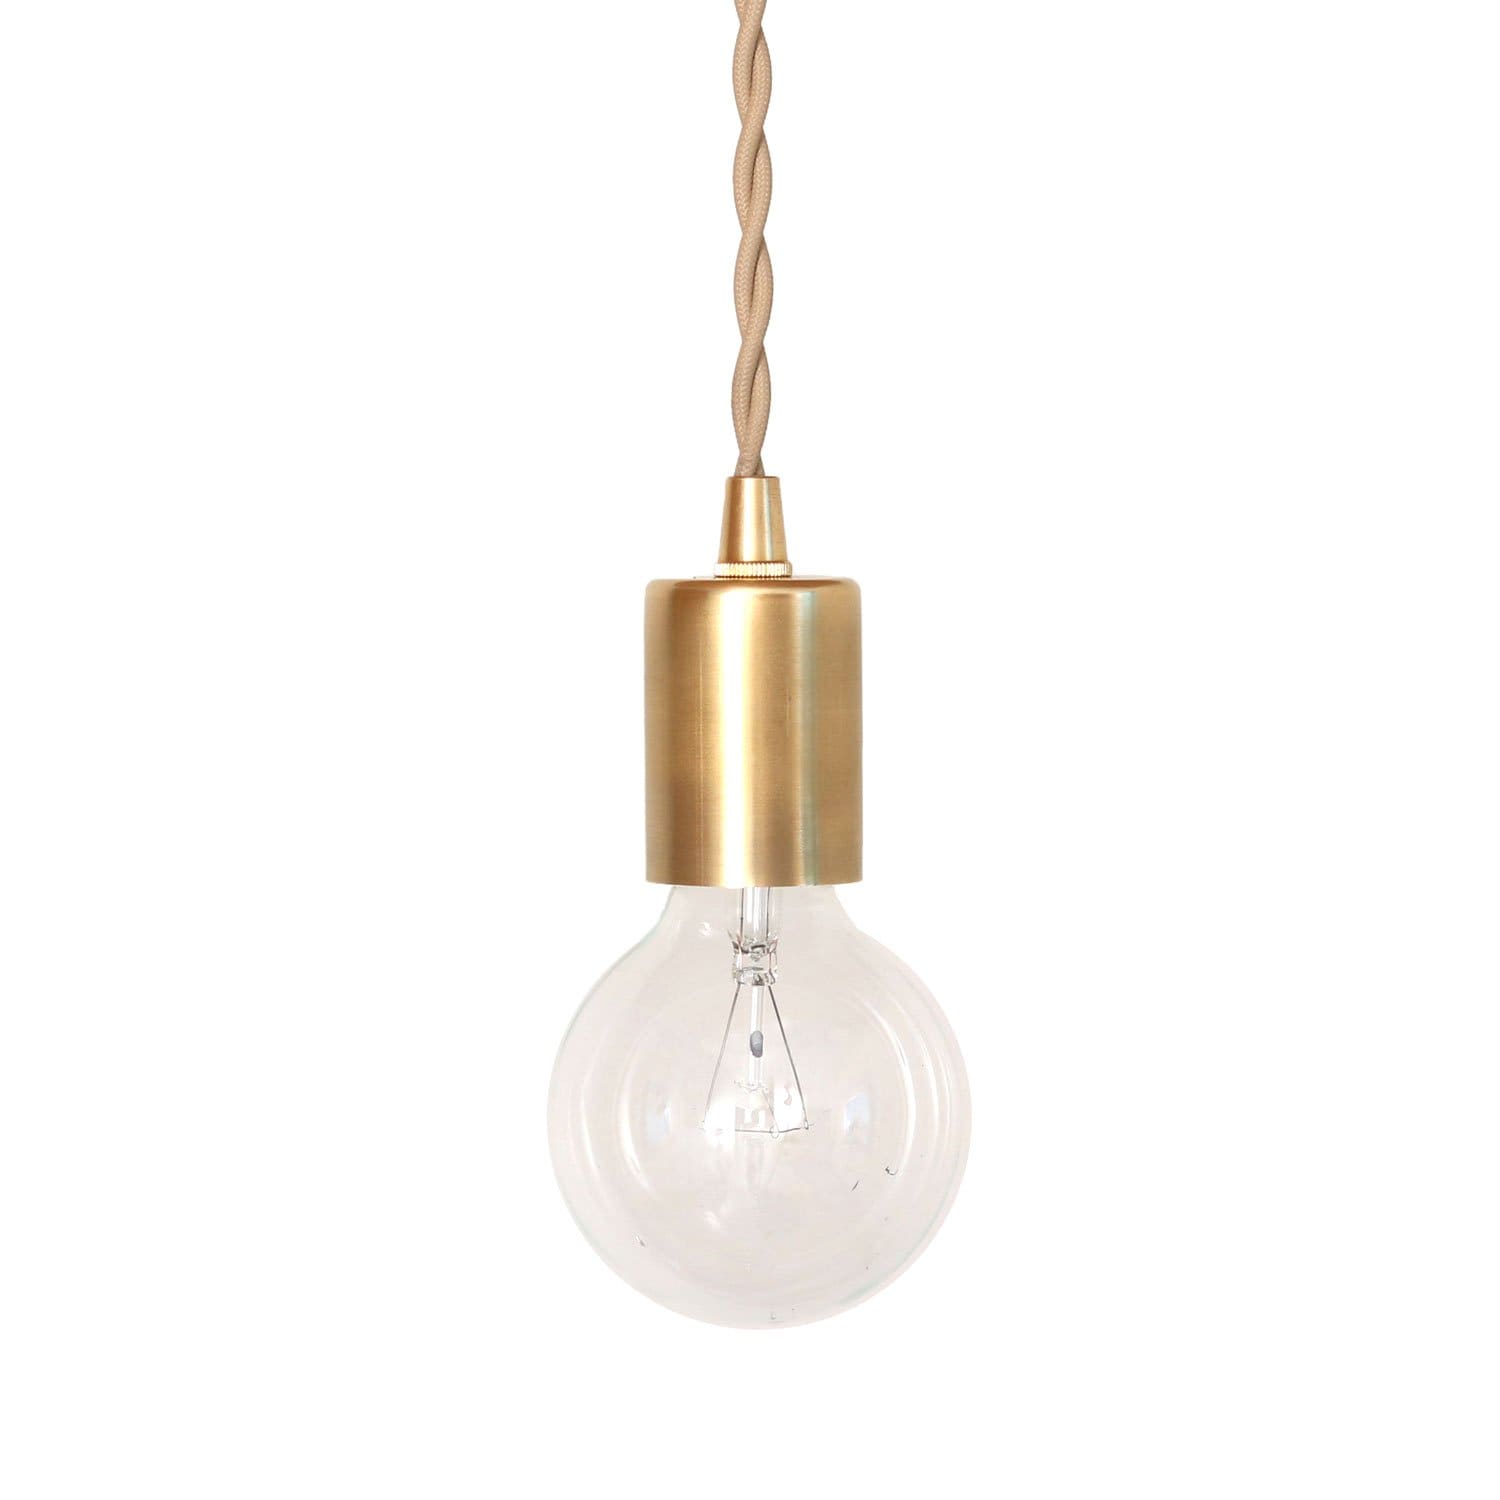 Pendant lamp: plug-in Brass / Black cord / Brass hardware onefortythree